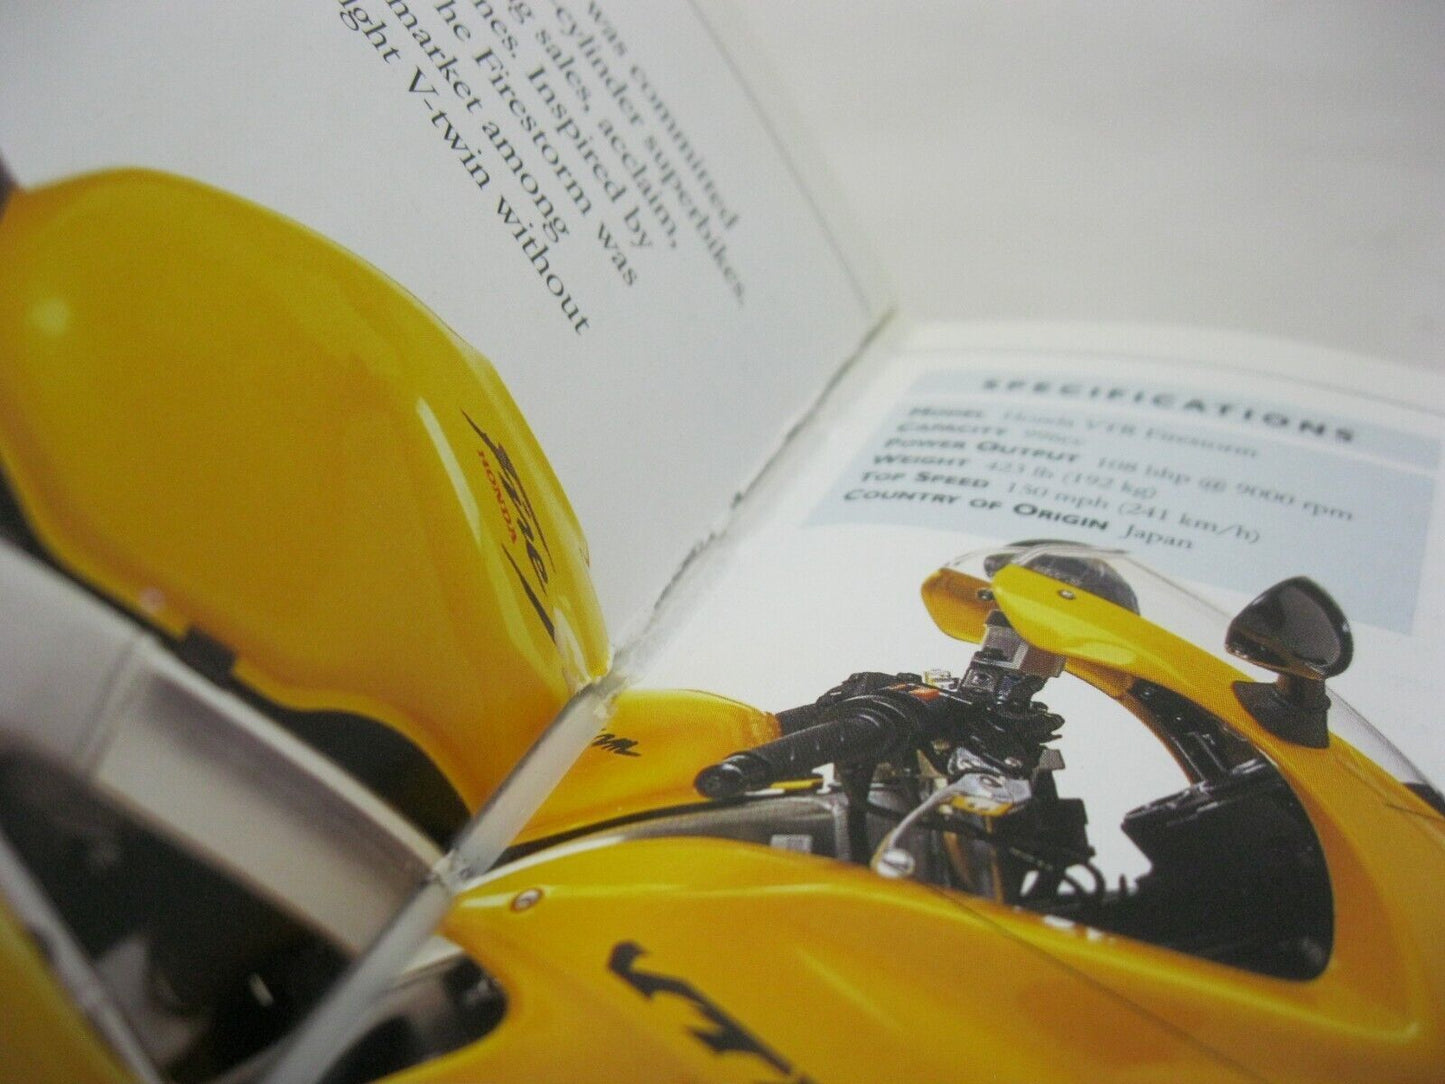 Hugo Wilson's Hot Bikes 2001 Softcover